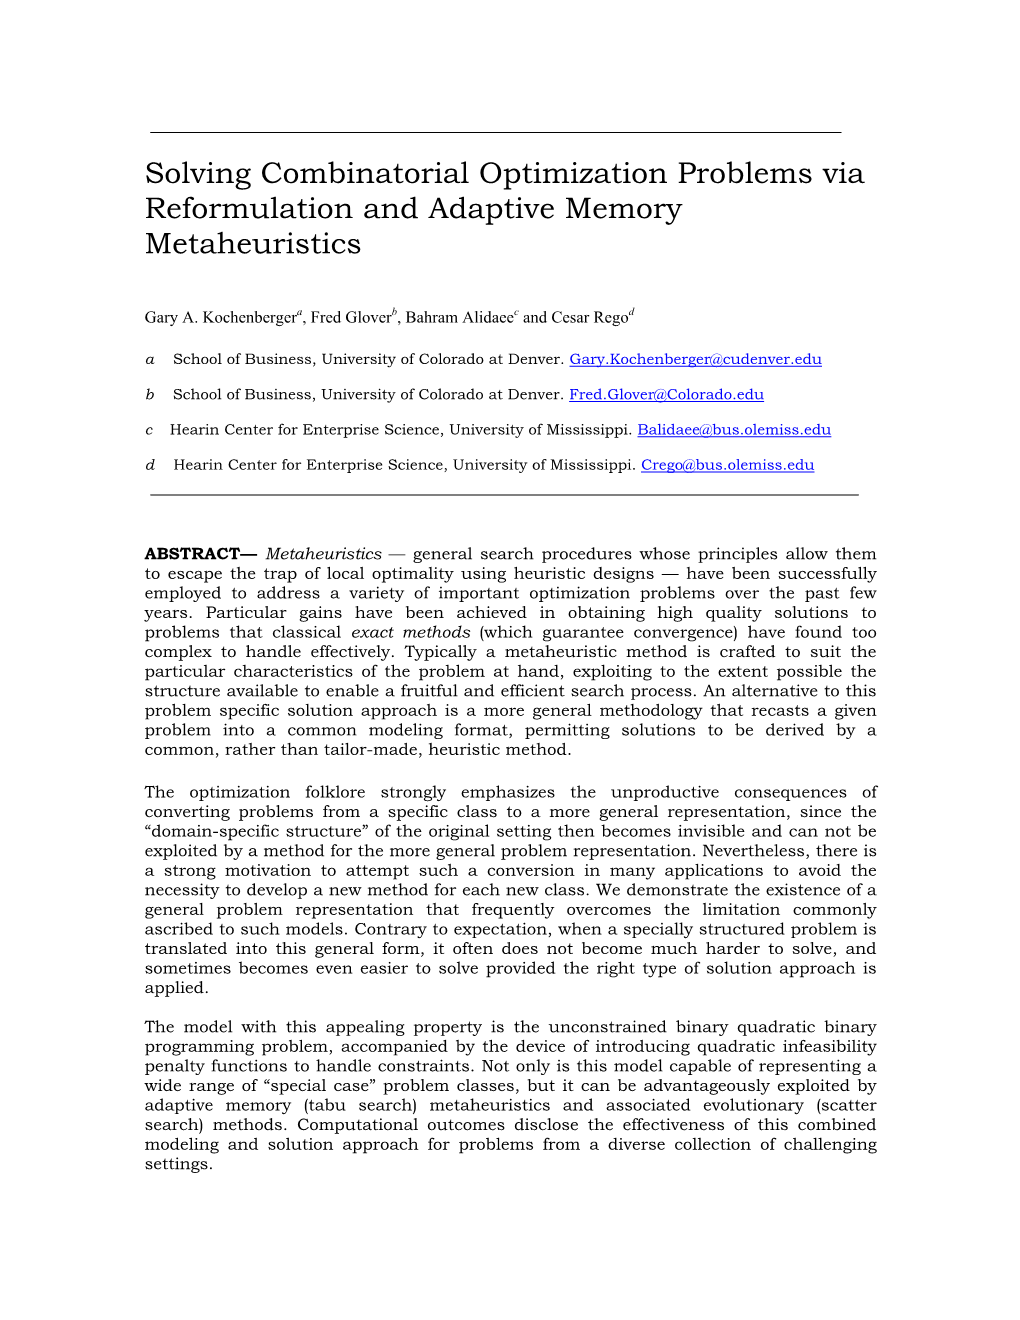 Solving Combinatorial Optimization Problems Via Reformulation and Adaptive Memory Metaheuristics